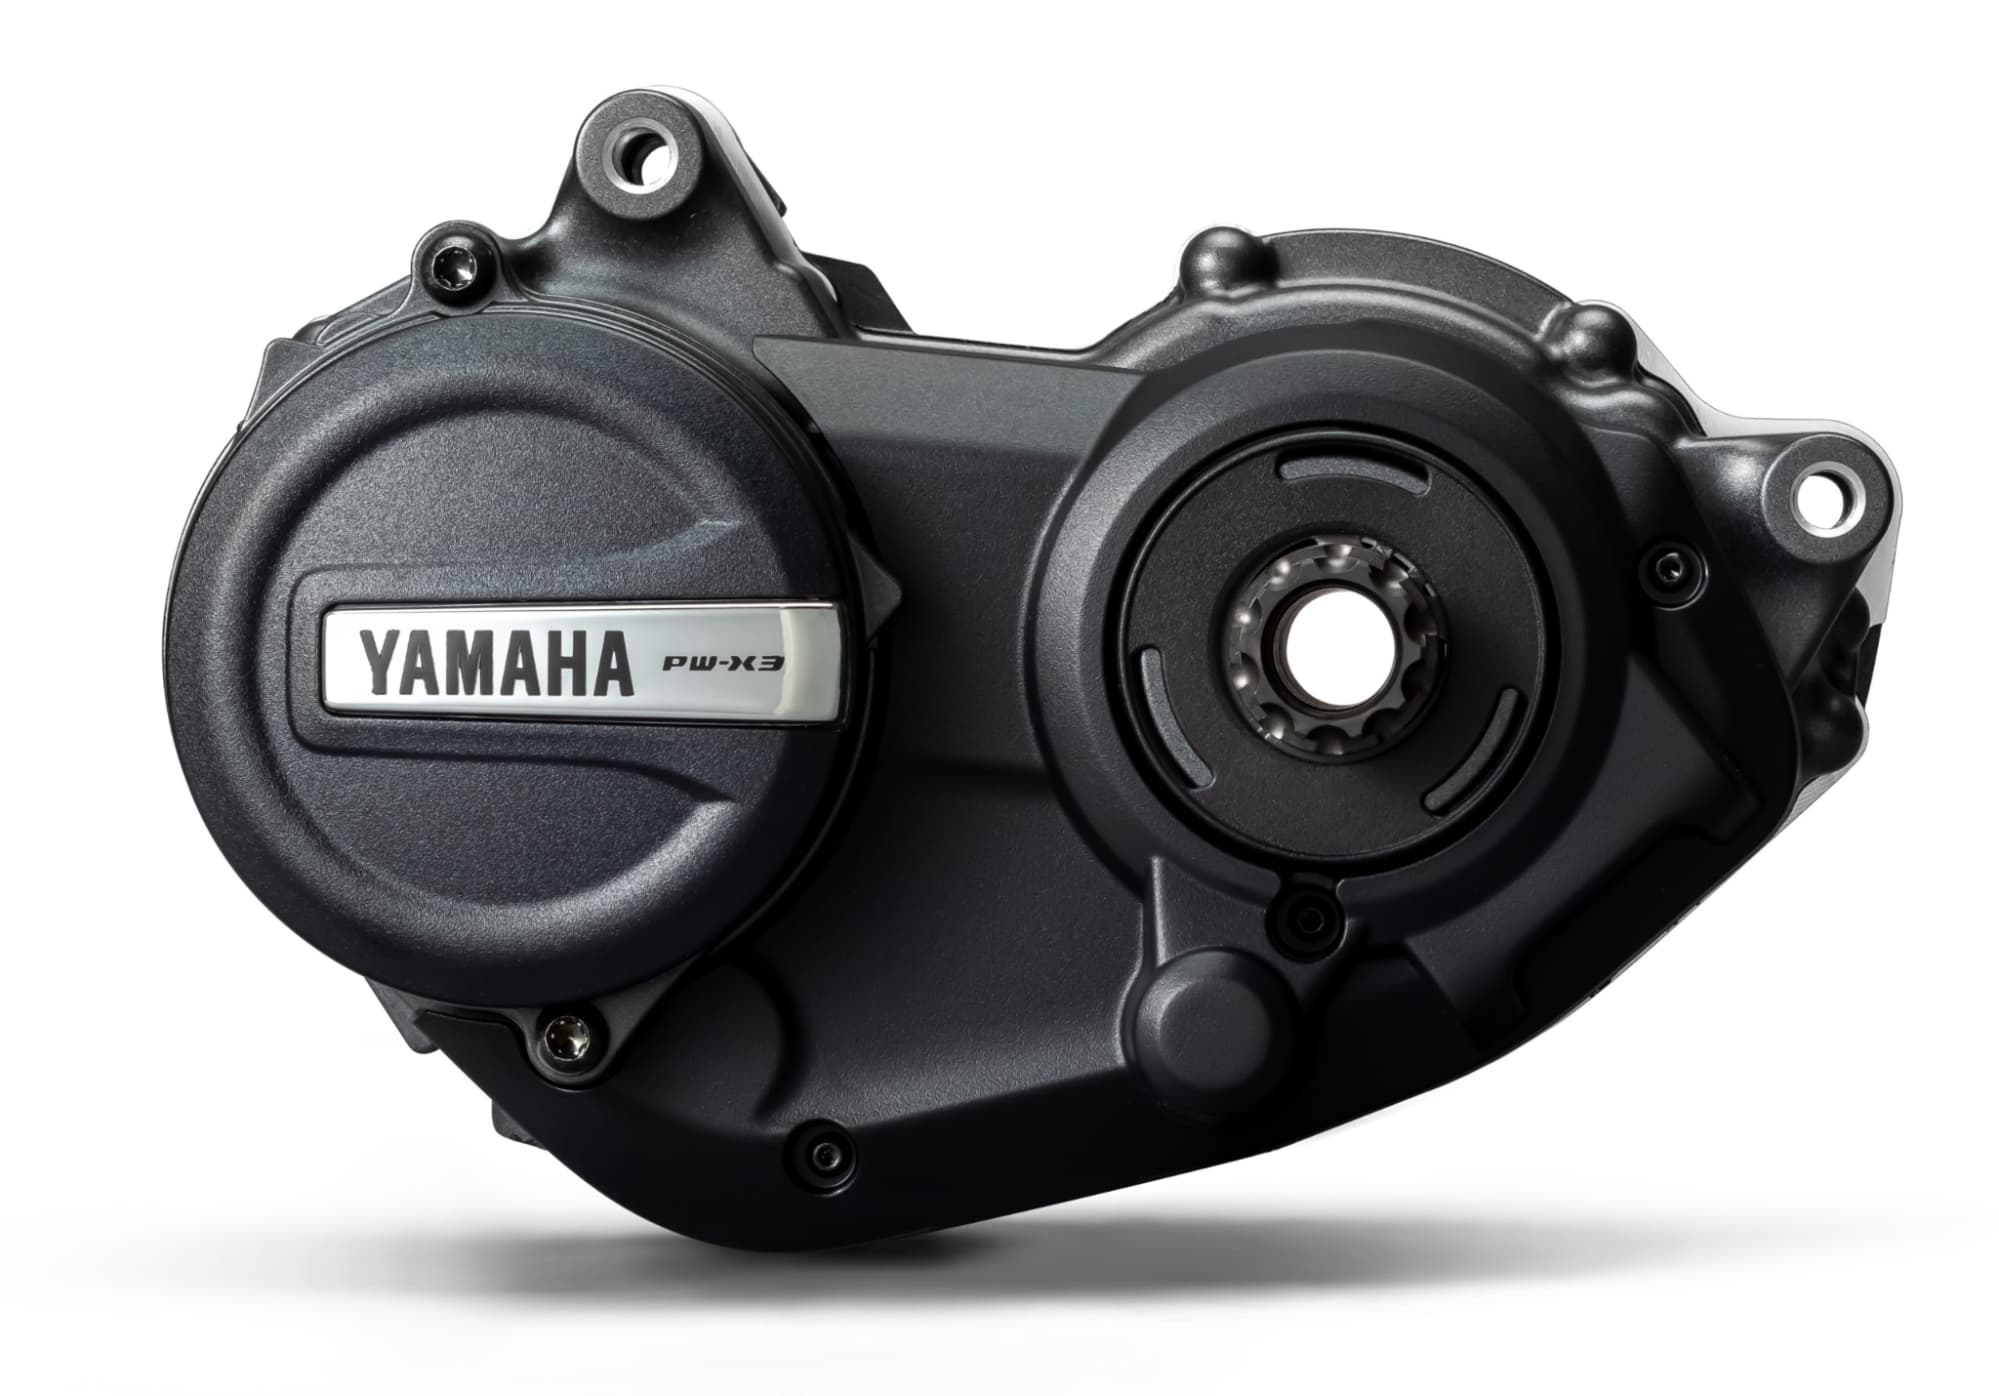 Are Yamaha E-Bike Motors Good? - PW-x3 Series